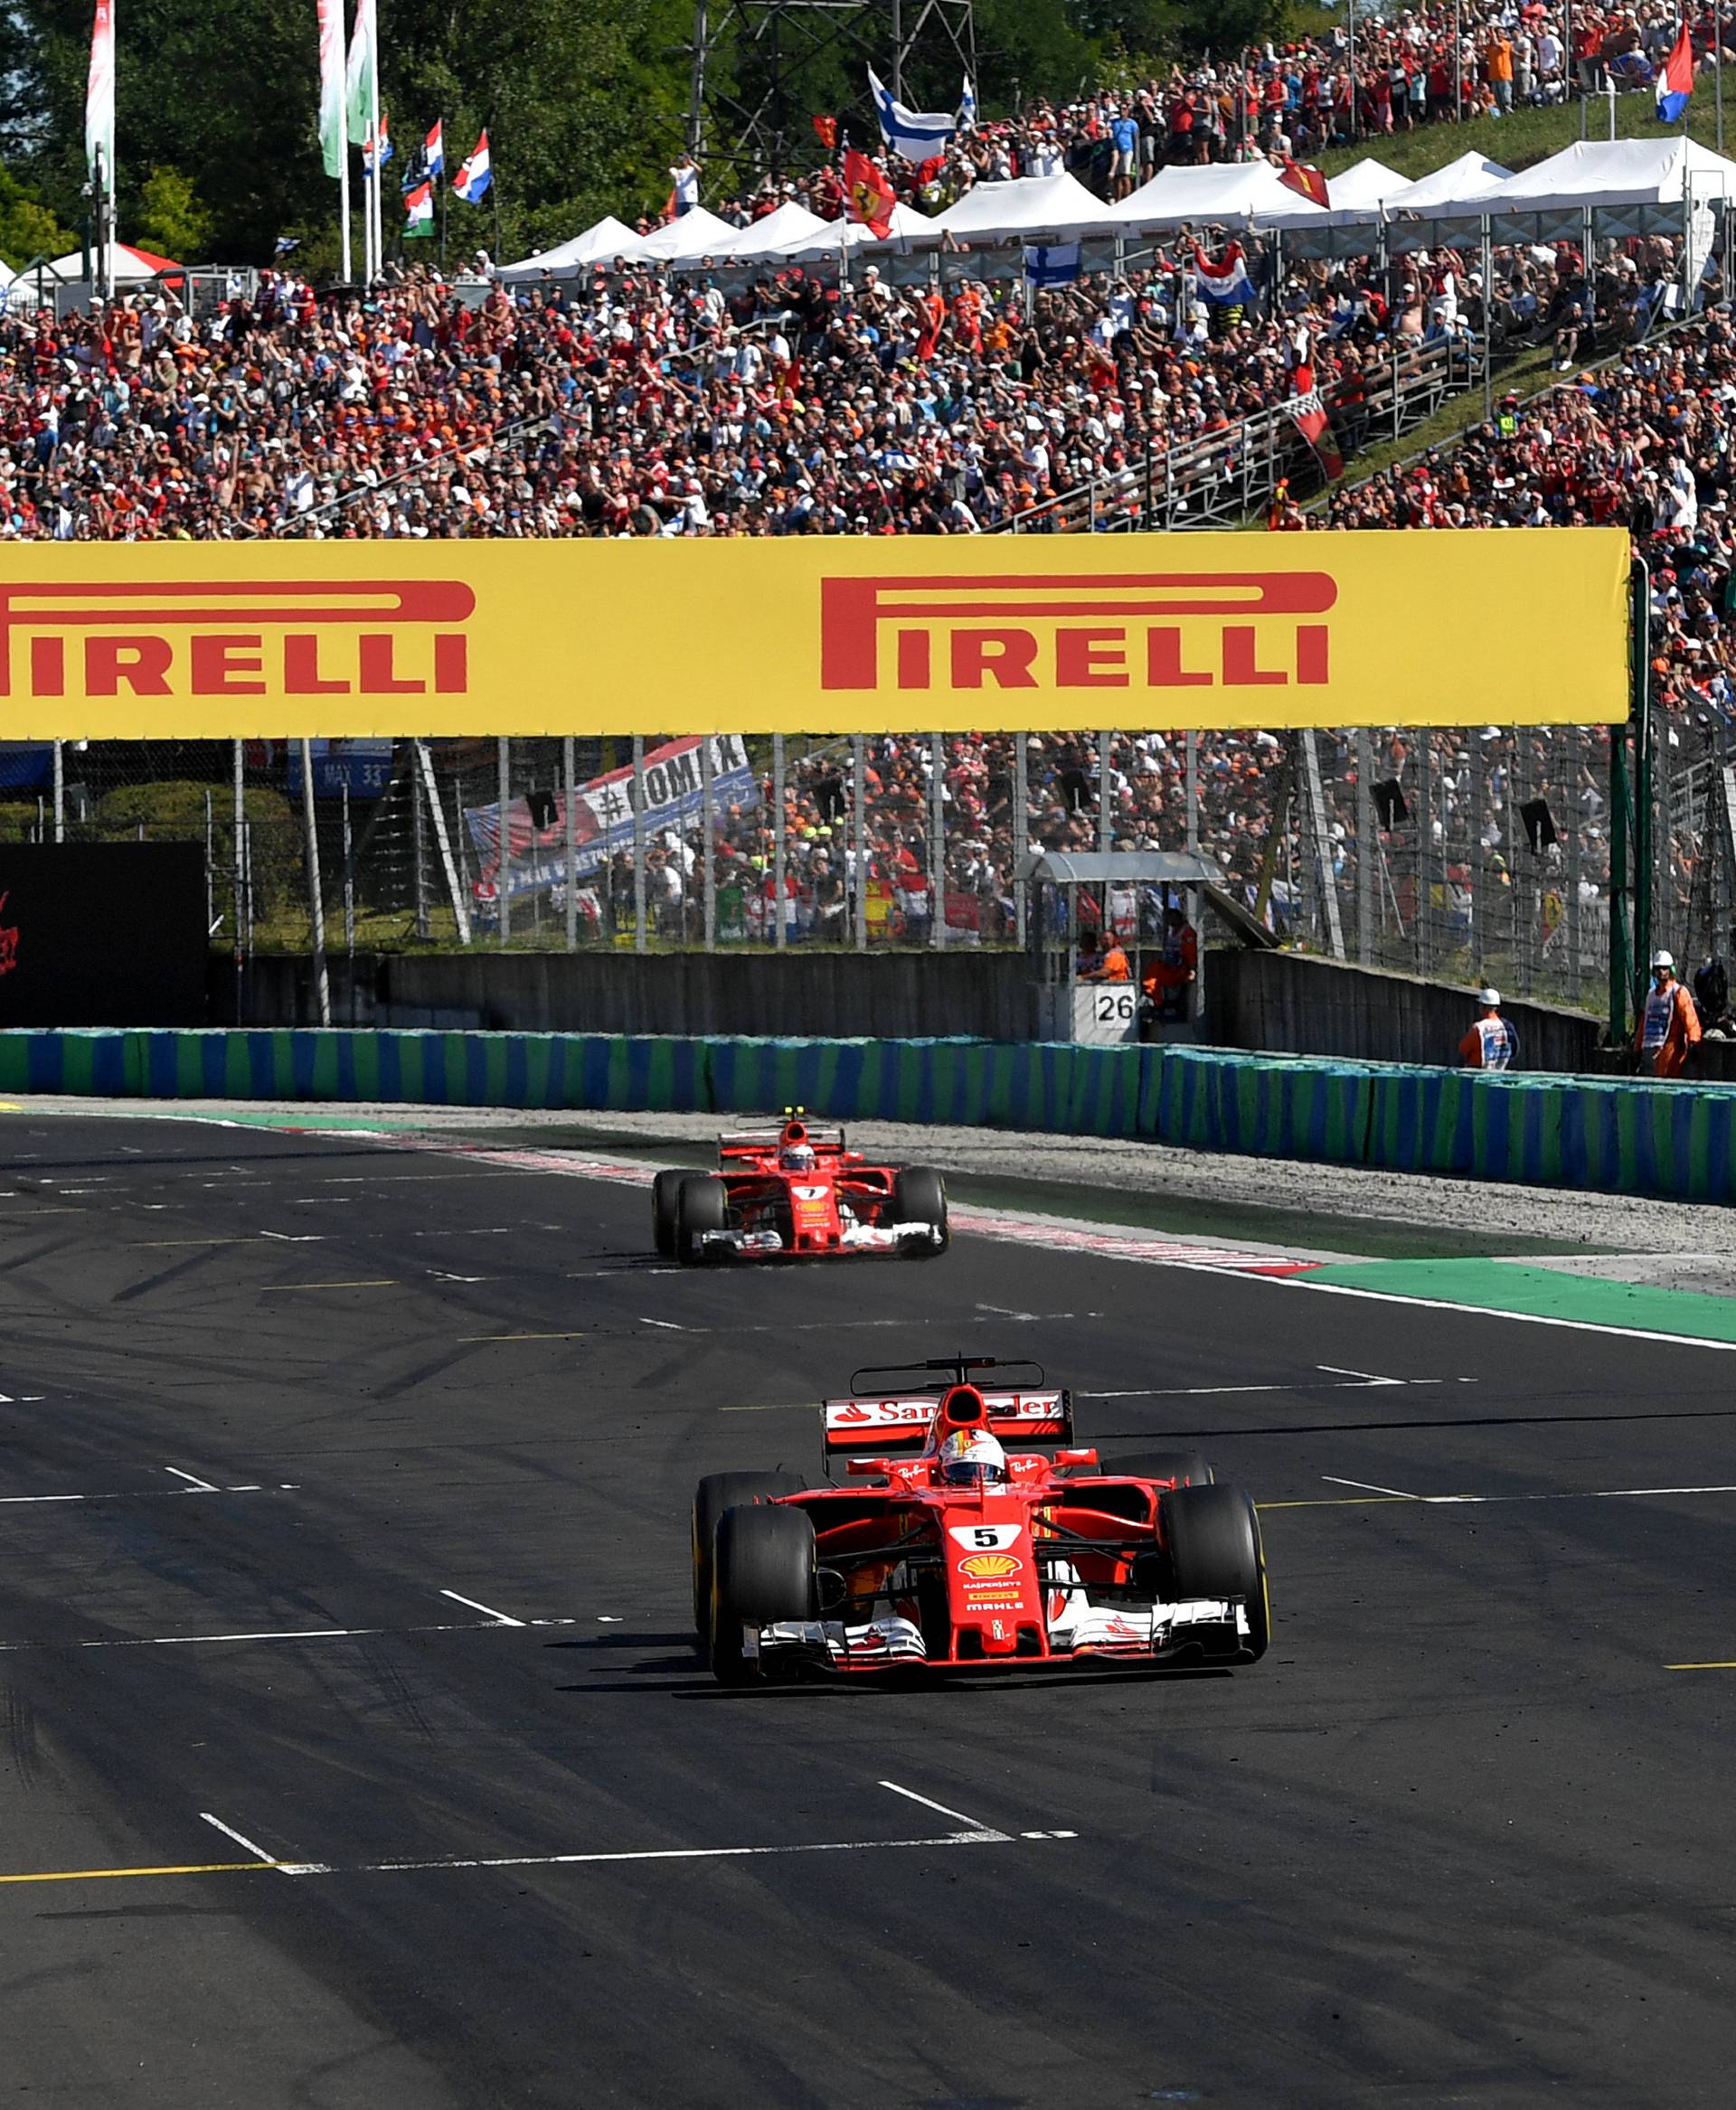 Ferrari's German driver Sebastian Vettel drives over the finish line during the Formula One Hungarian Grand Prix at the Hungaroring racing circuit in Budapest